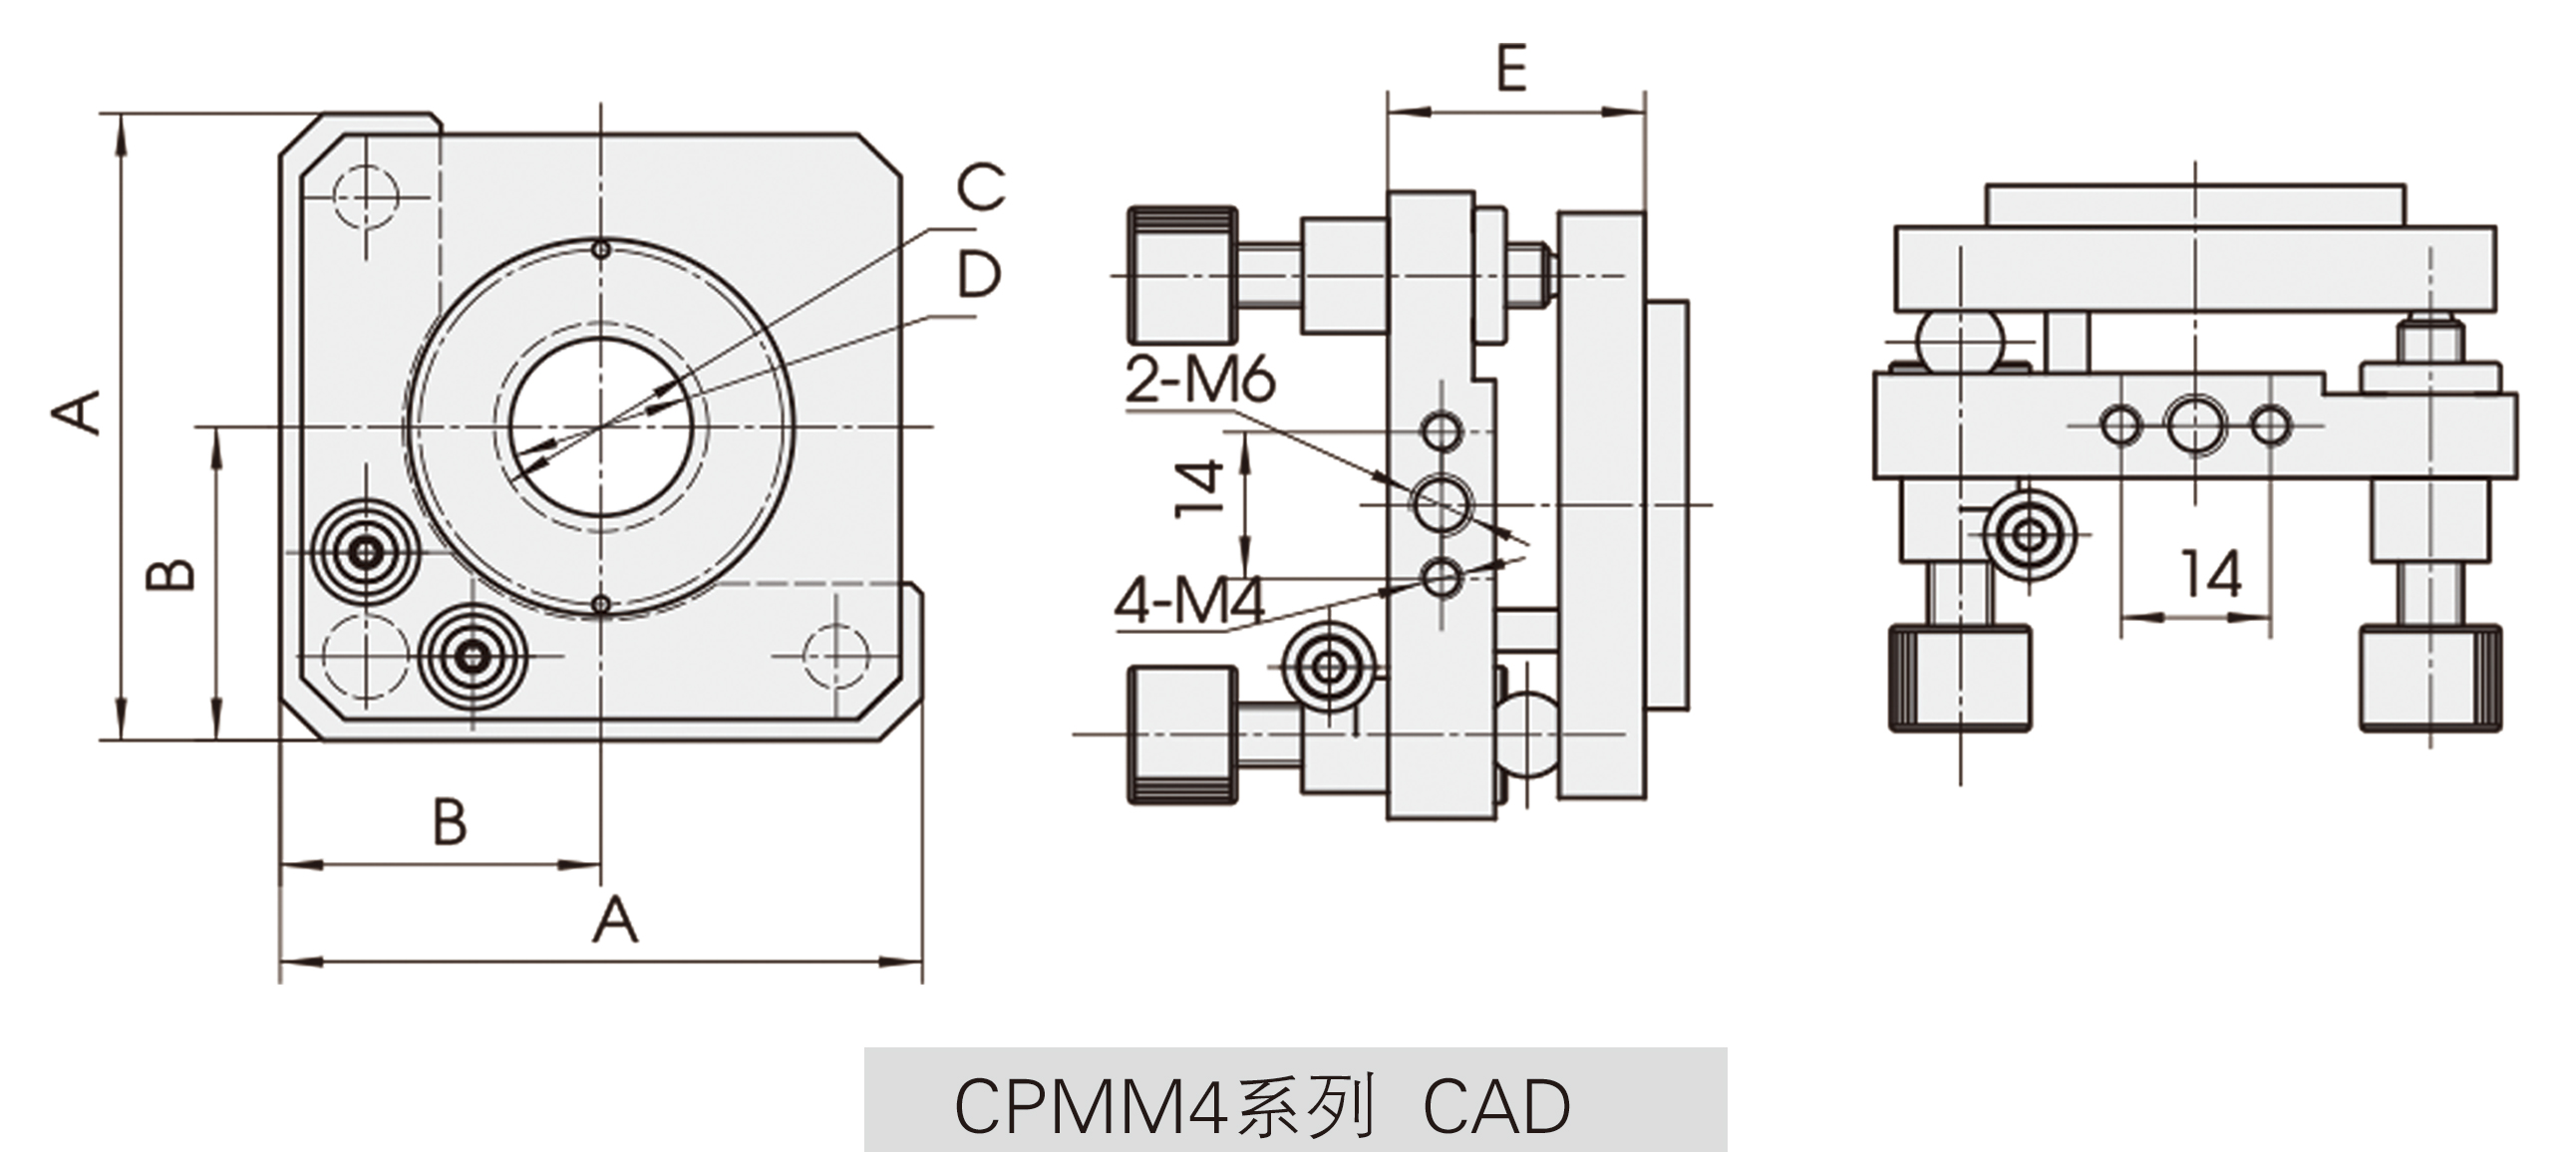 CPMM4系列两维调整镜架CAD